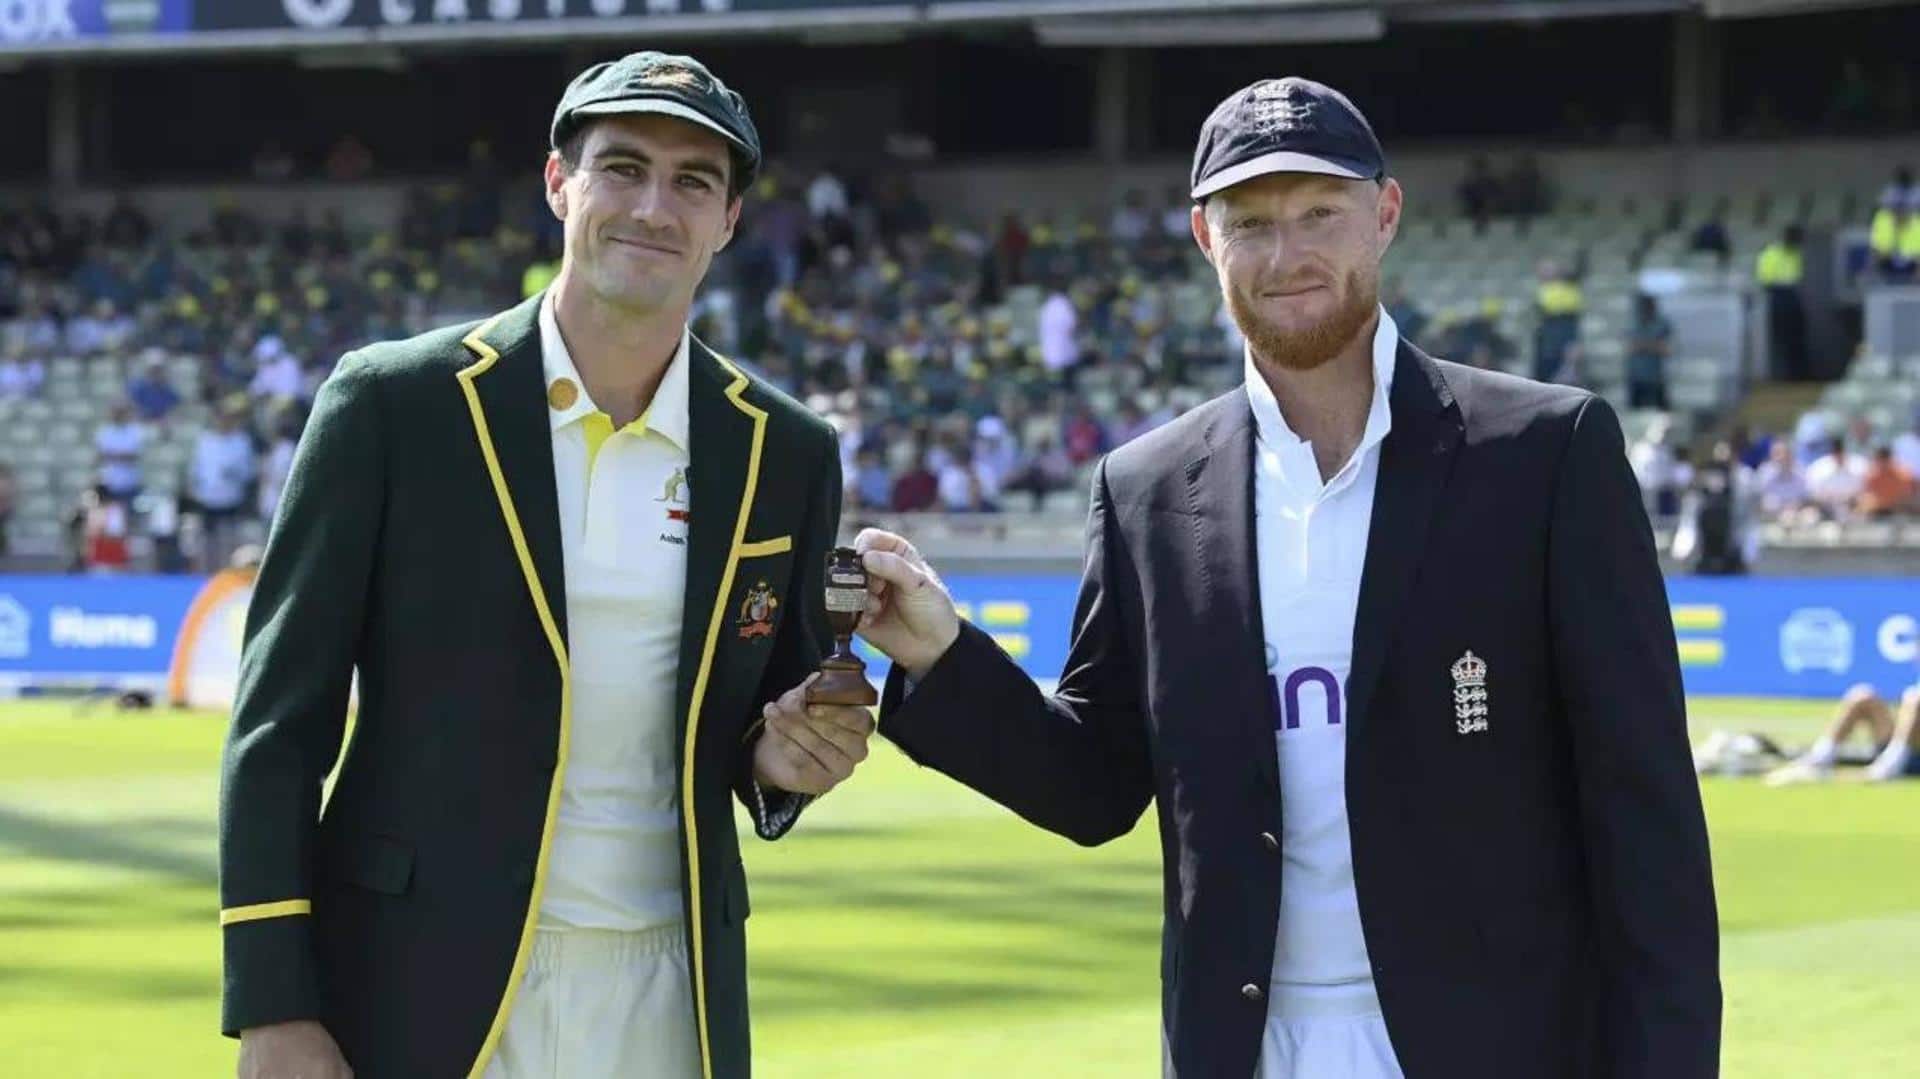 Ashes 2023: Will England end Australia's bid for historic win?